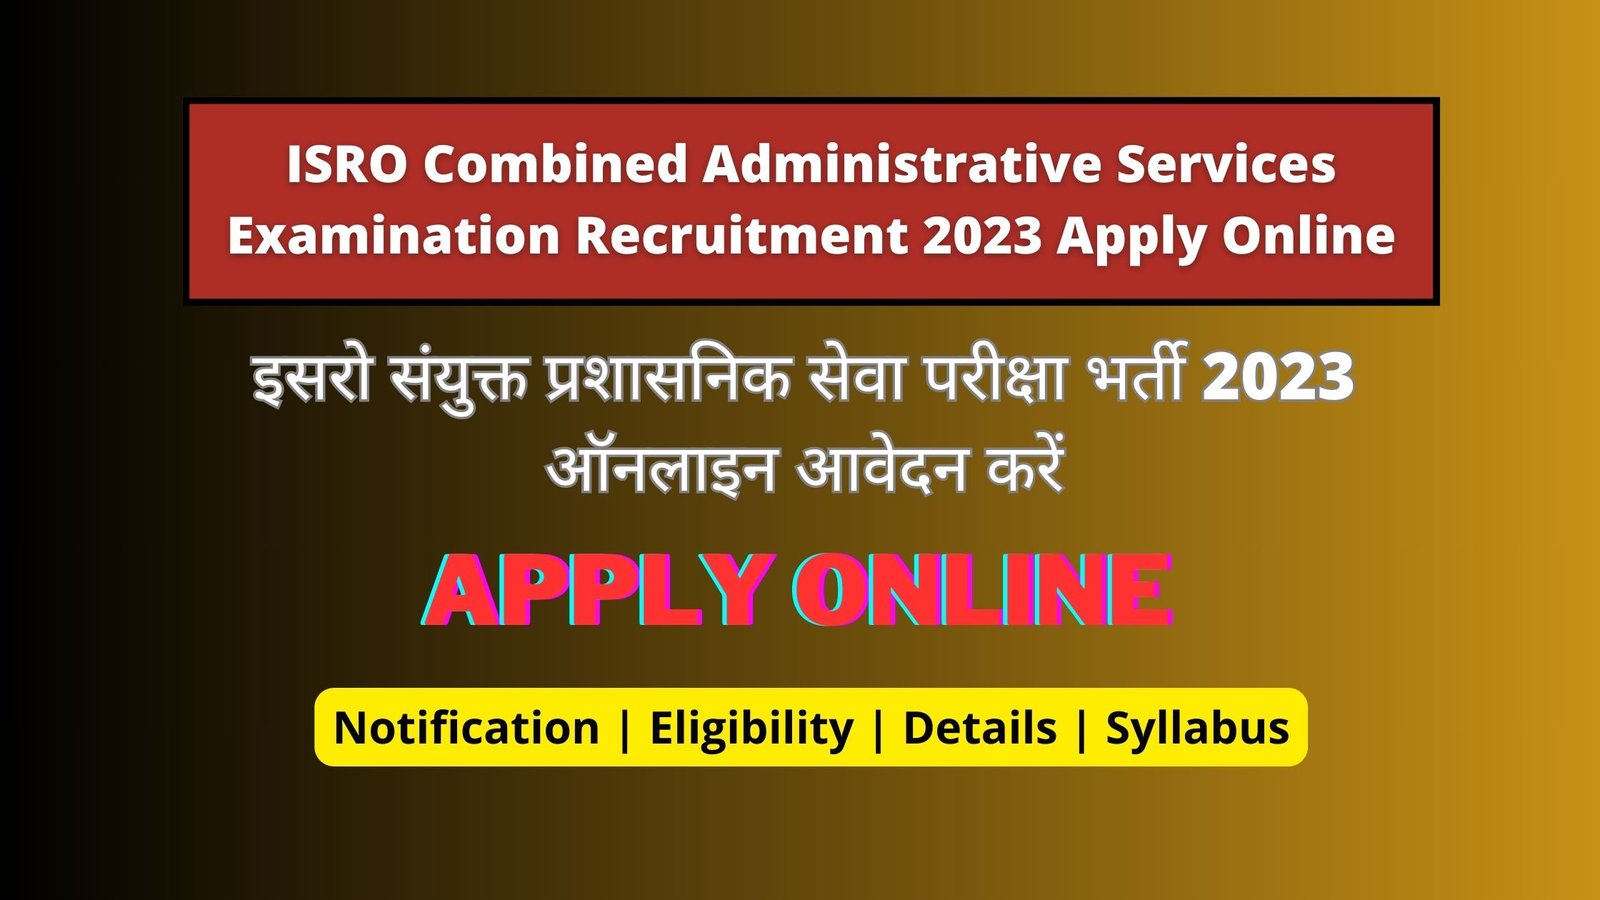 ISRO Combined Administrative Services Examination Recruitment